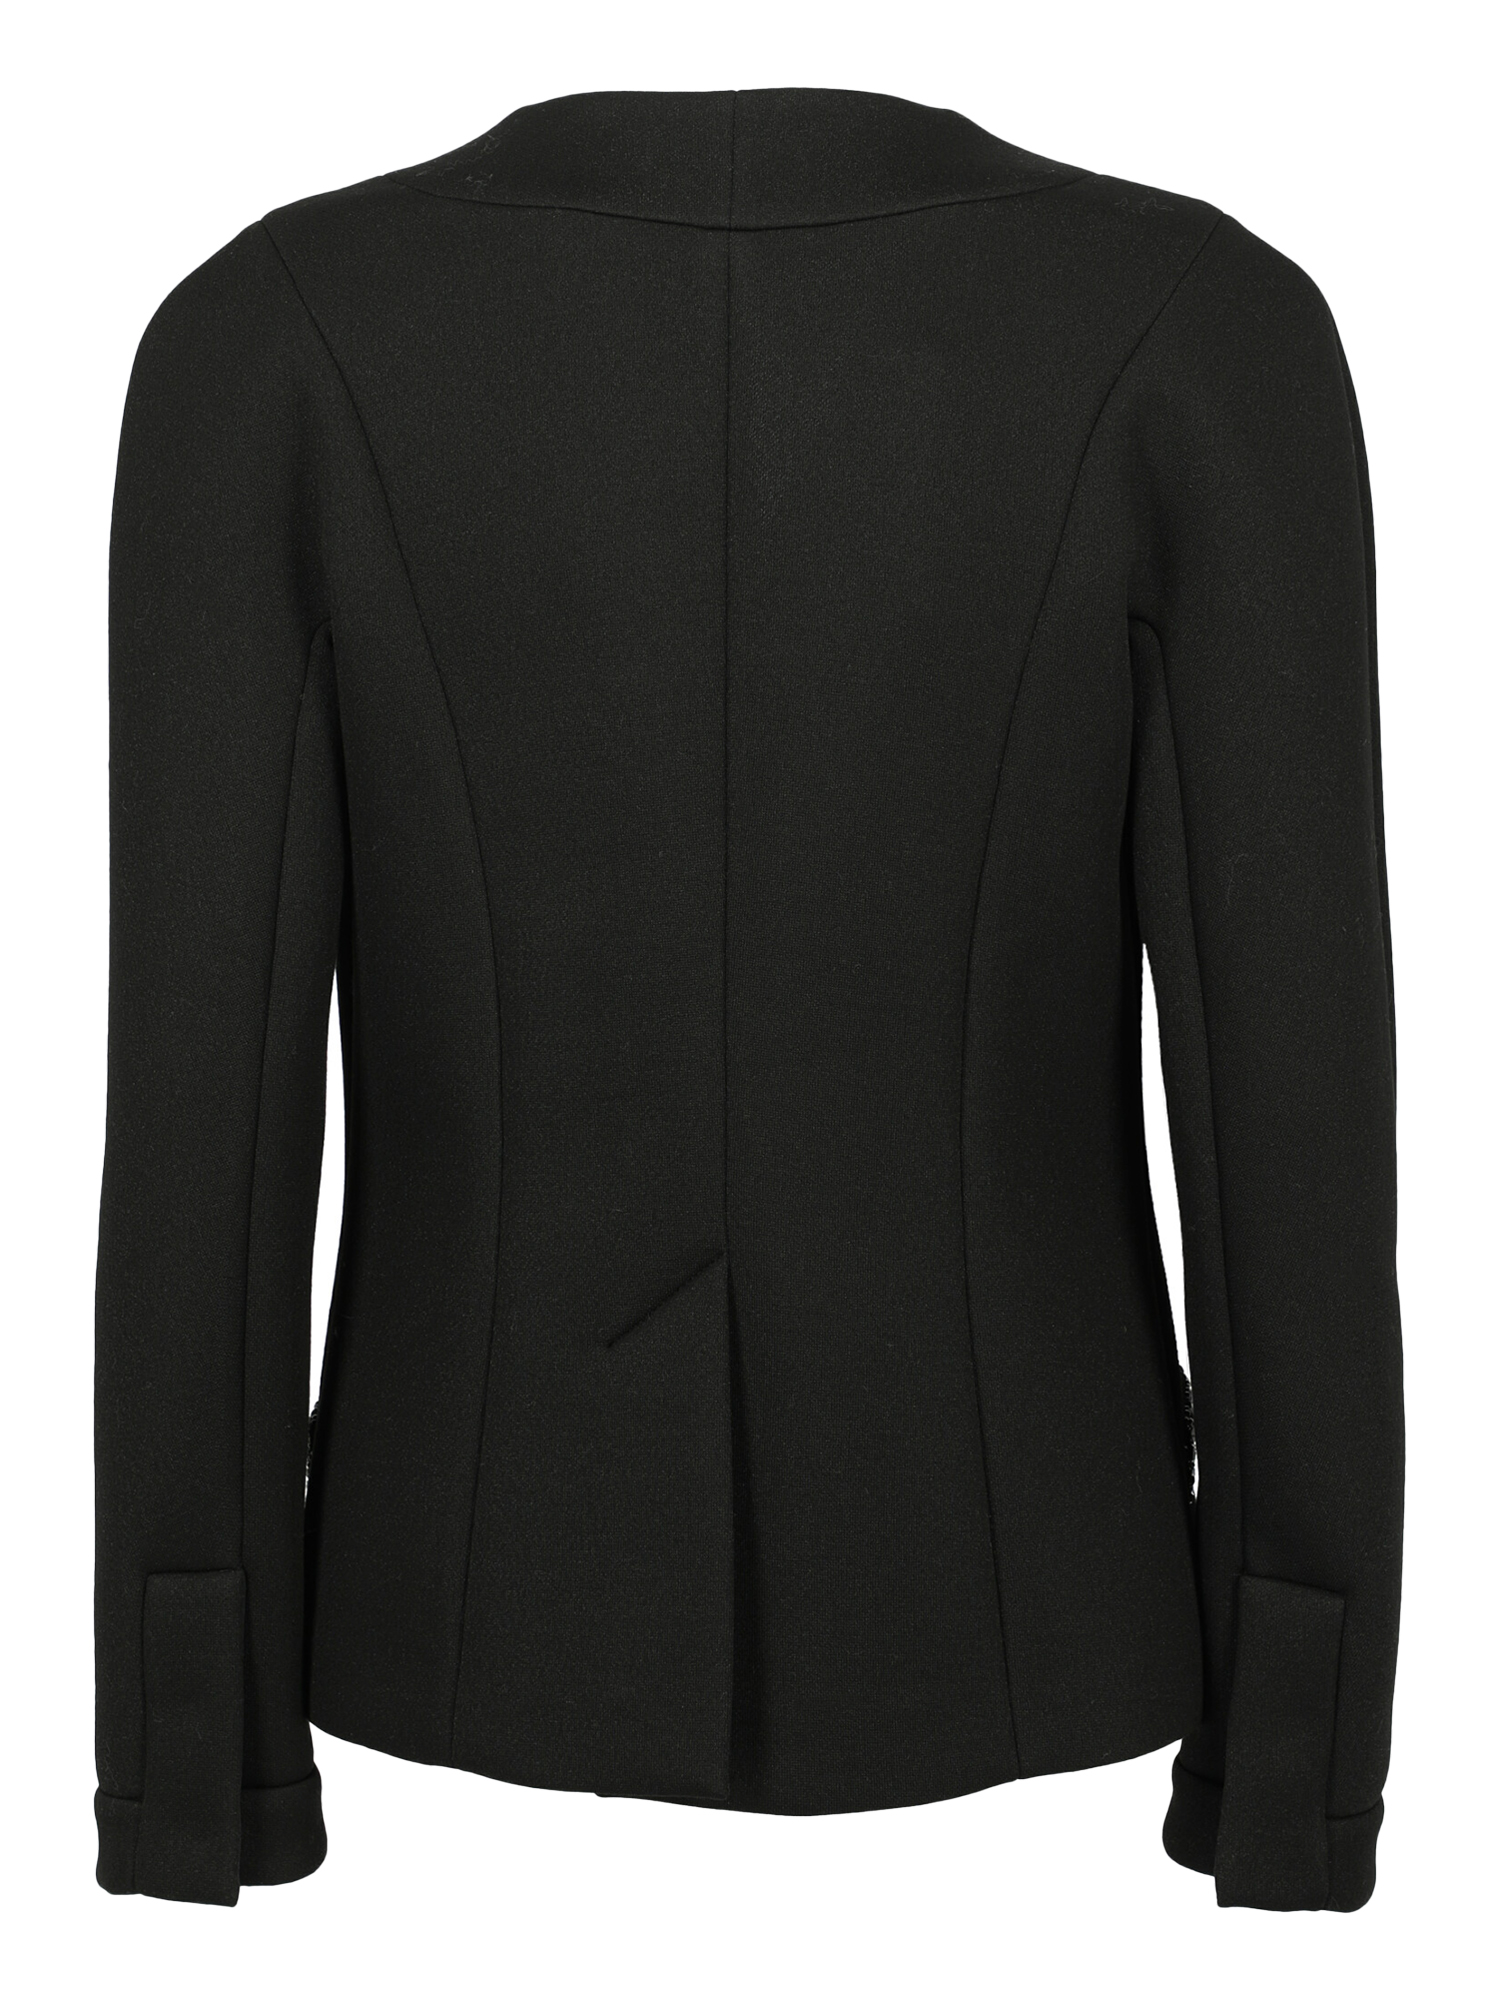 Giorgio Armani Special Price Women Jackets Black IT 46 | eBay